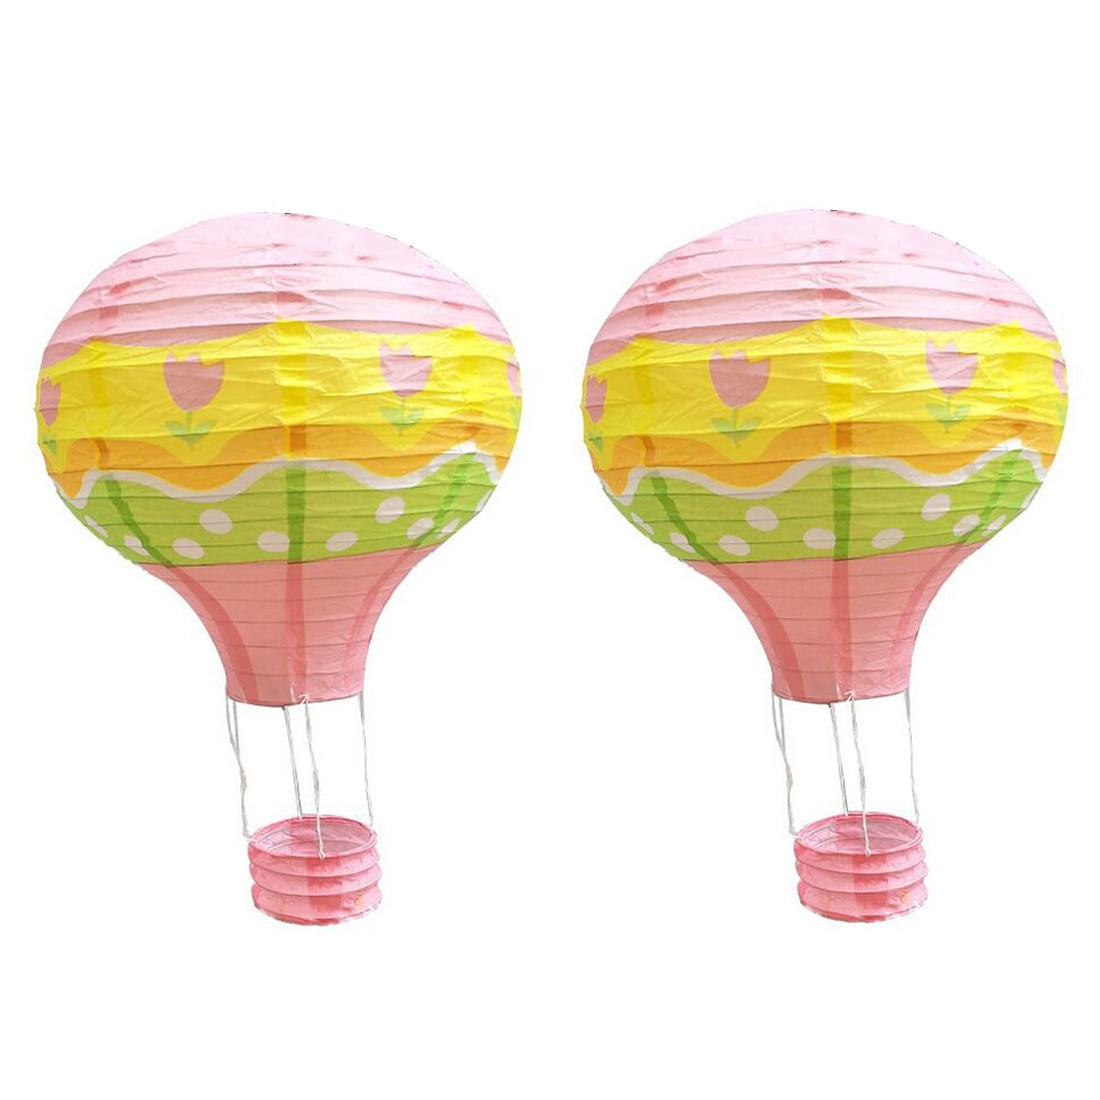 Paper Lantern Lights For Bedroom
 Best 35Cm Rainbow Printing Paper Lantern Air Balloon